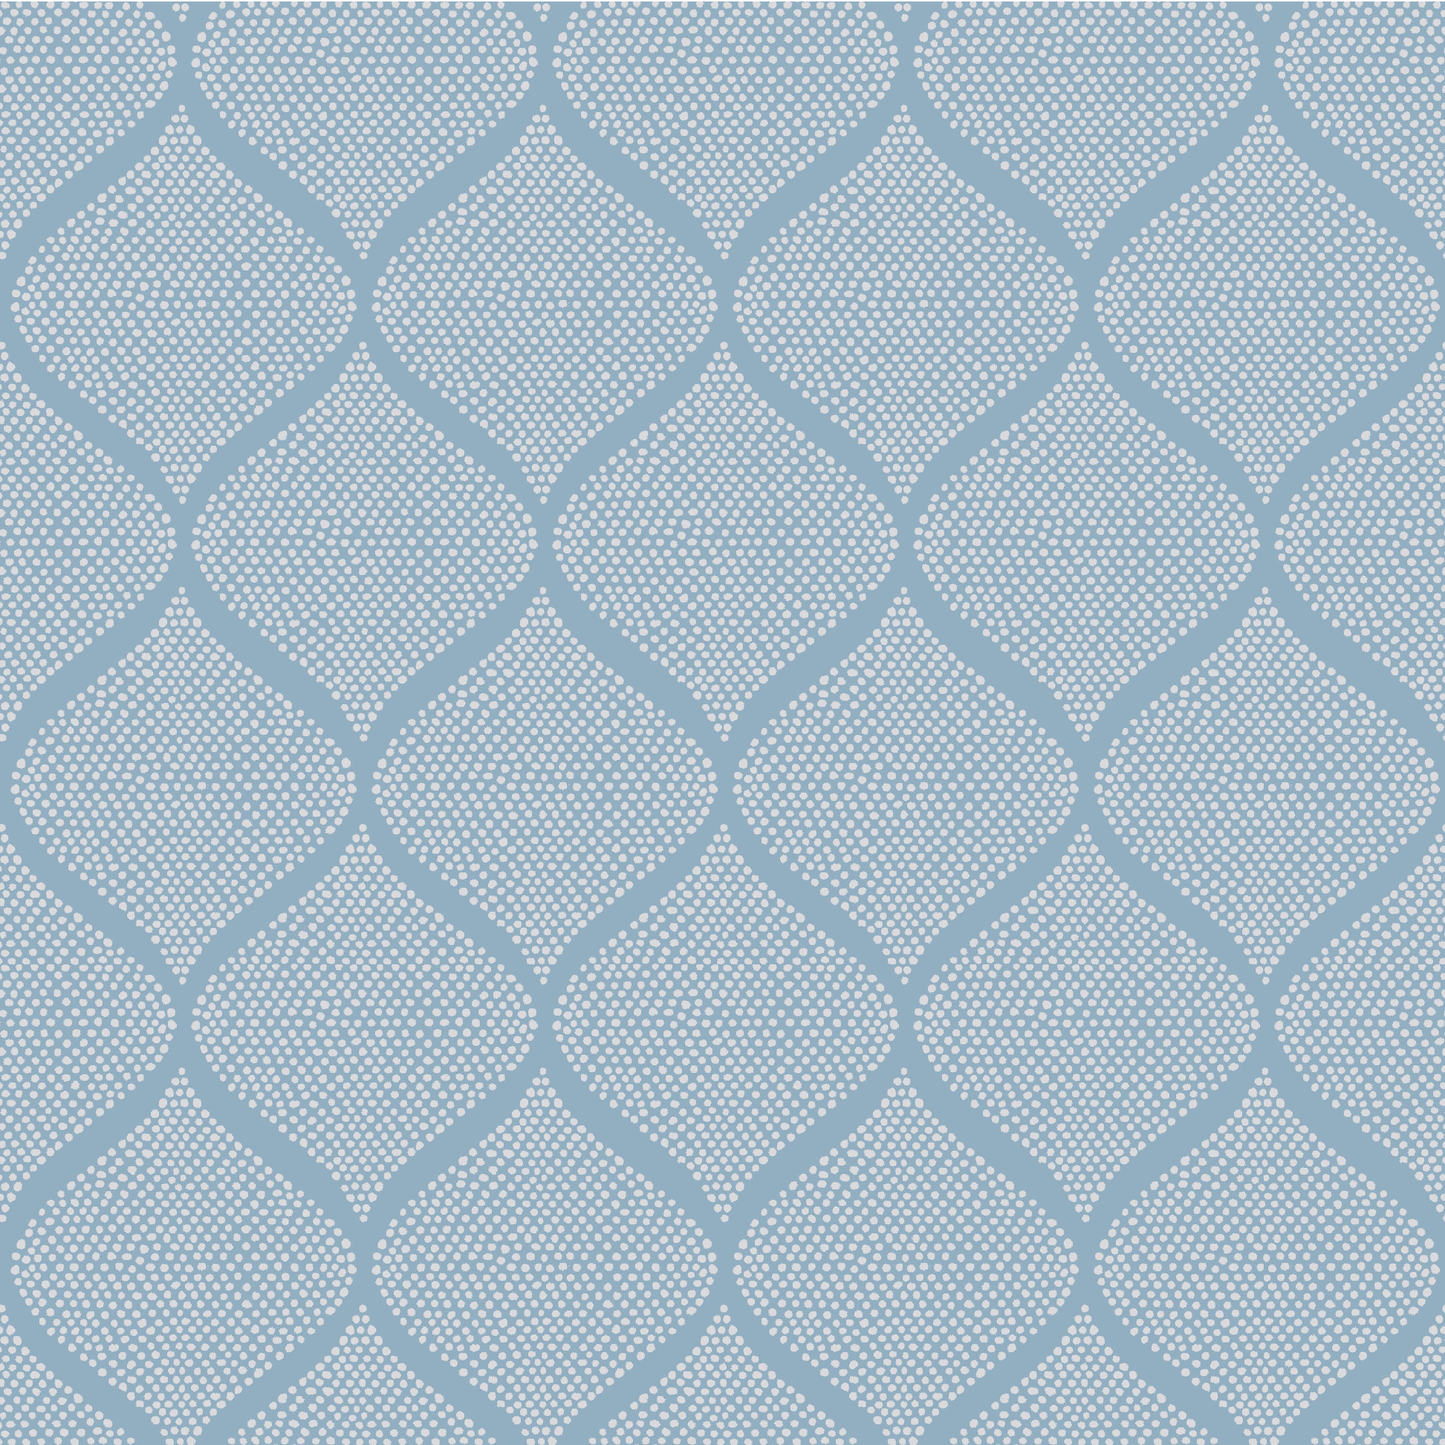 Fez Horizon Blue Fabric Sample